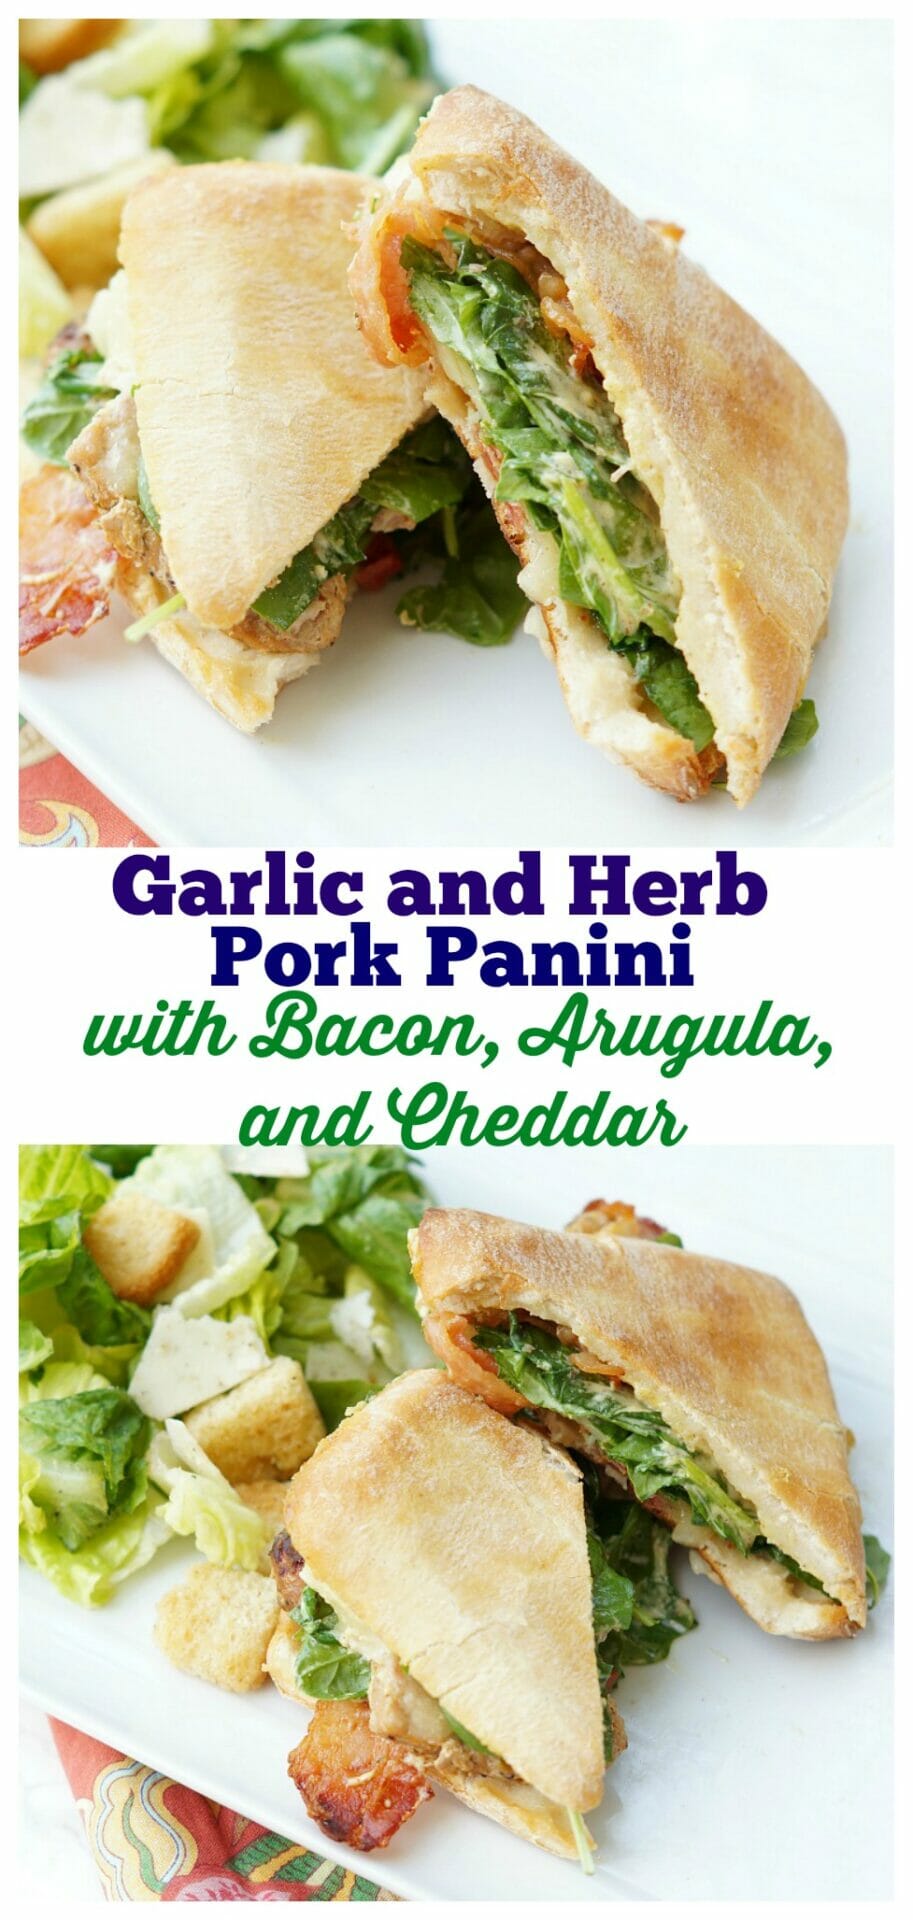 Garlic and Herb Pork Panini with Bacon, Cheddar, and Arugula 